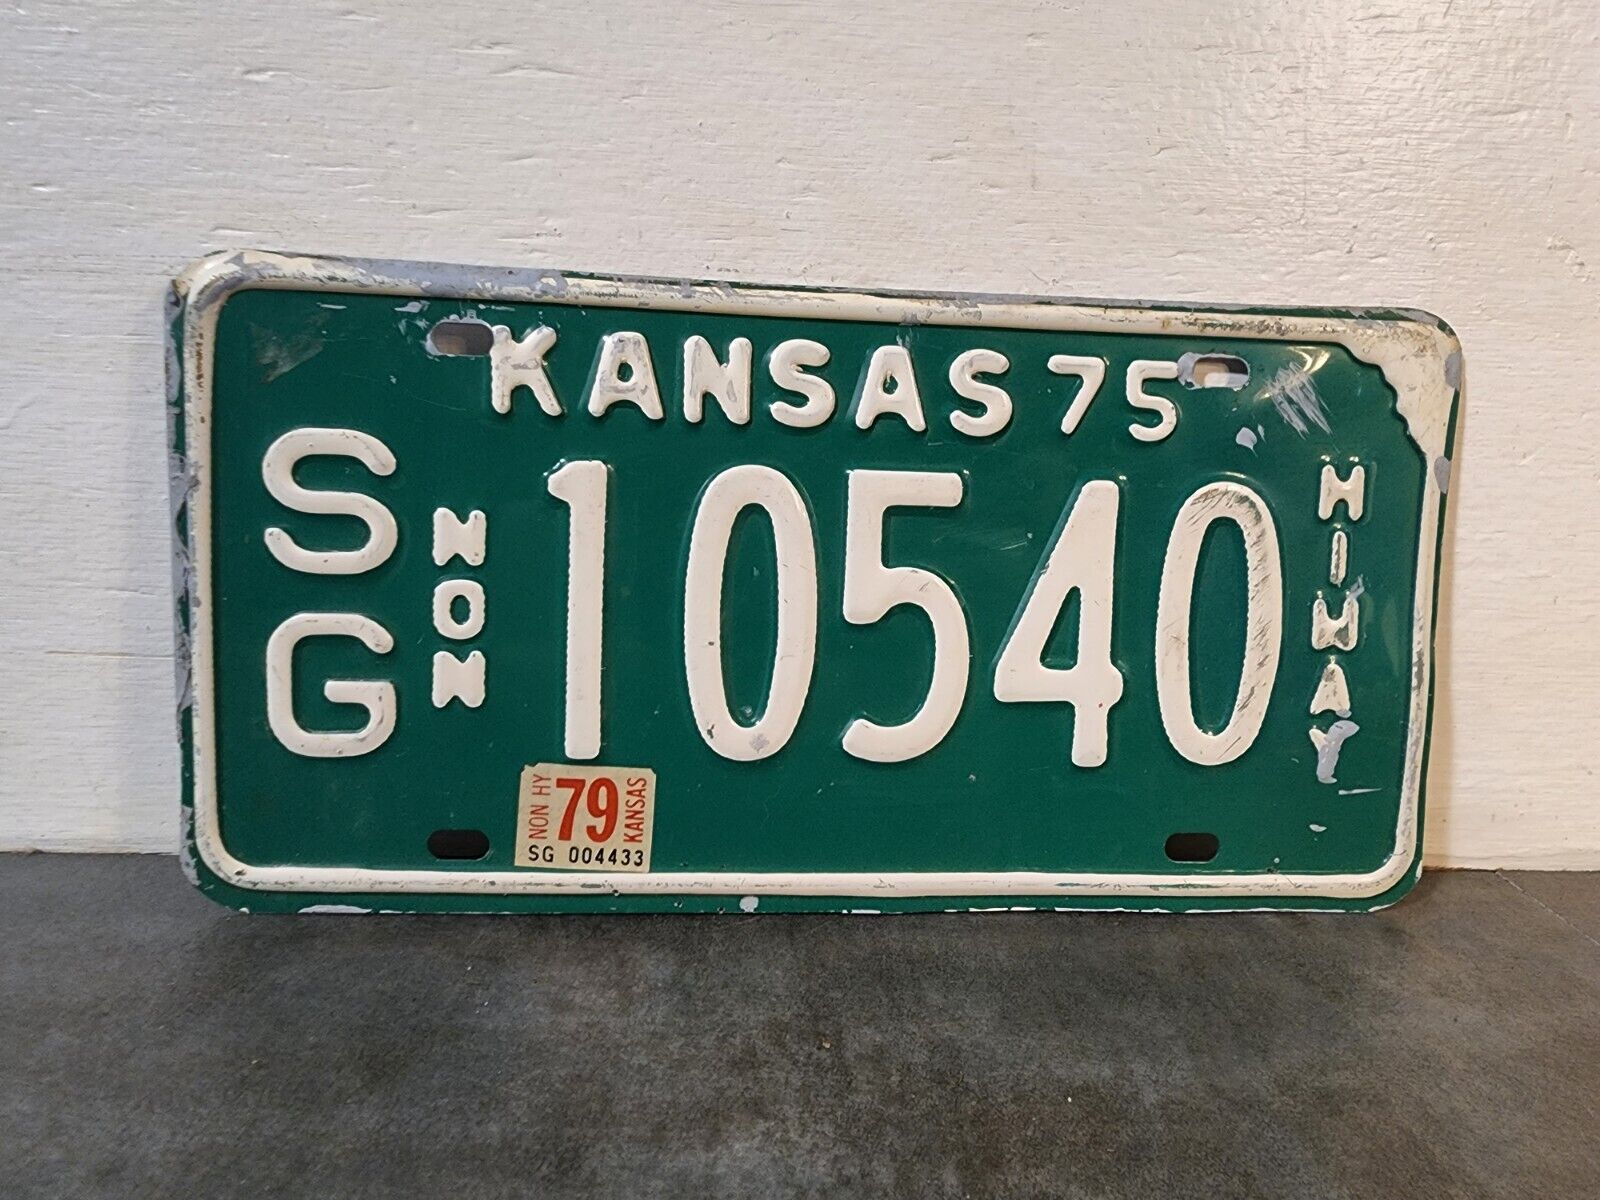 Kansas 1975 Non Highway License Plate SG-10540